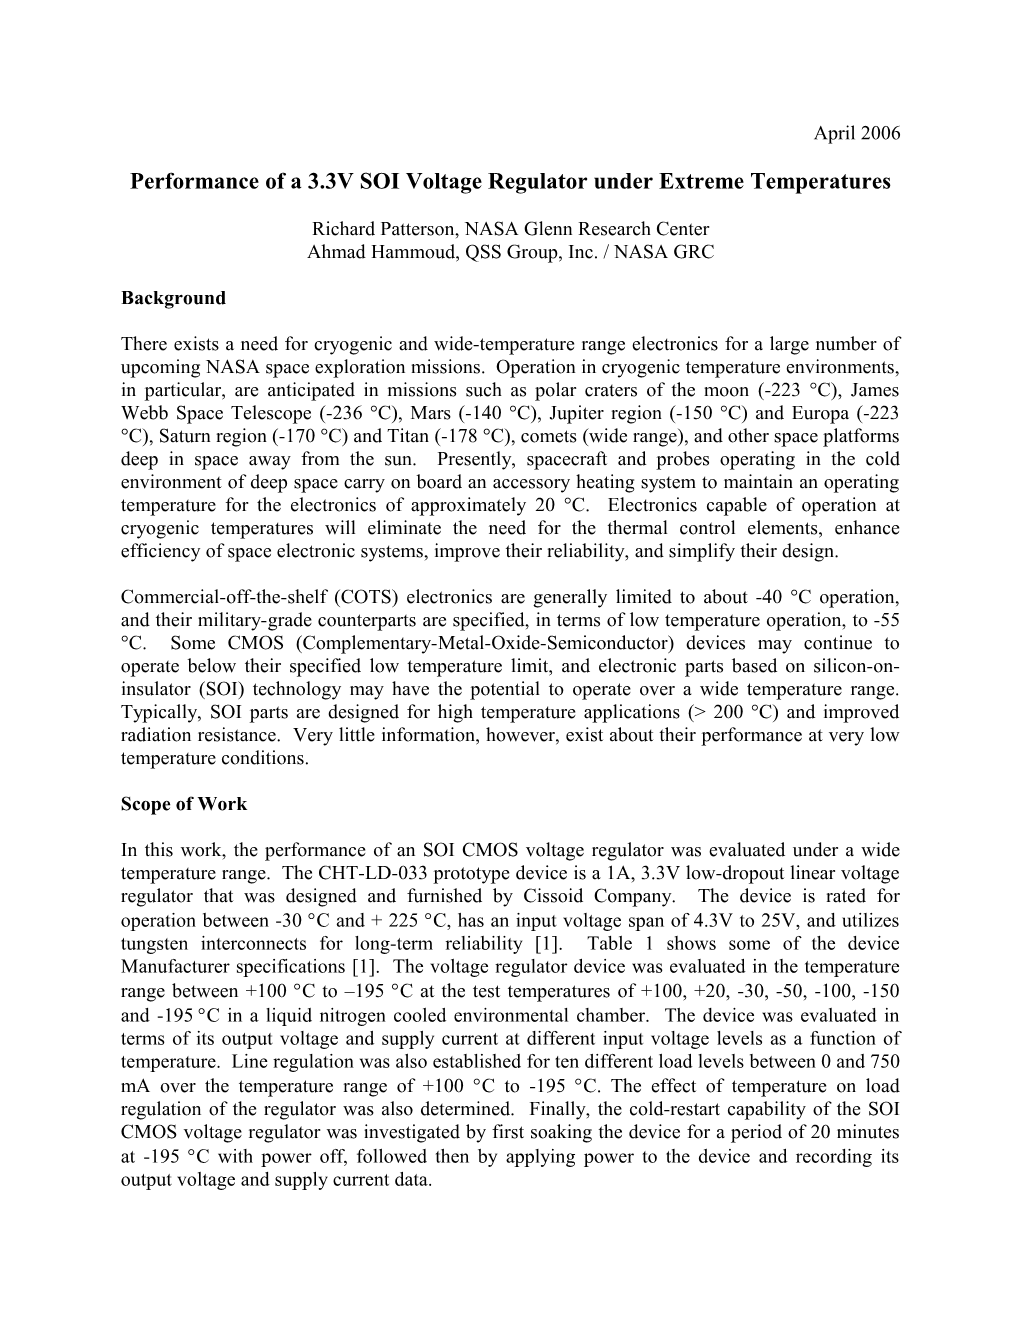 Performance of a 3.3V SOI Voltage Regulator Under Extreme Temperatures